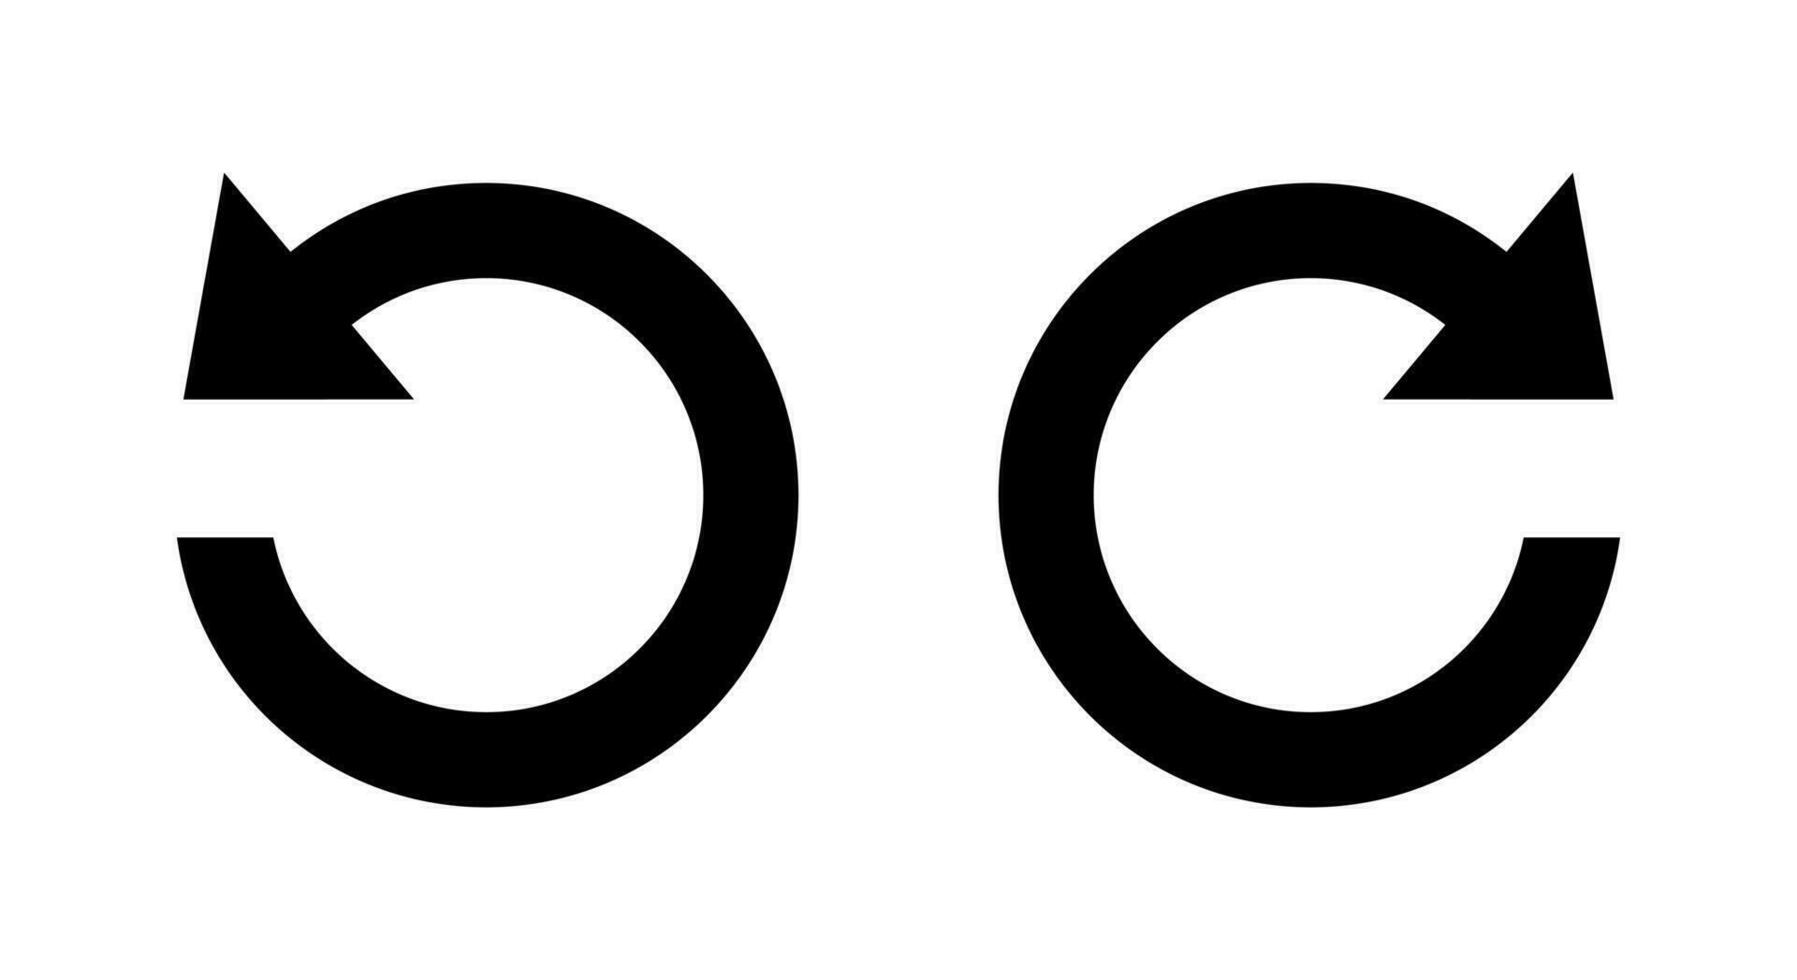 Redo and undo icon vector. Circular Arrow sign symbol vector